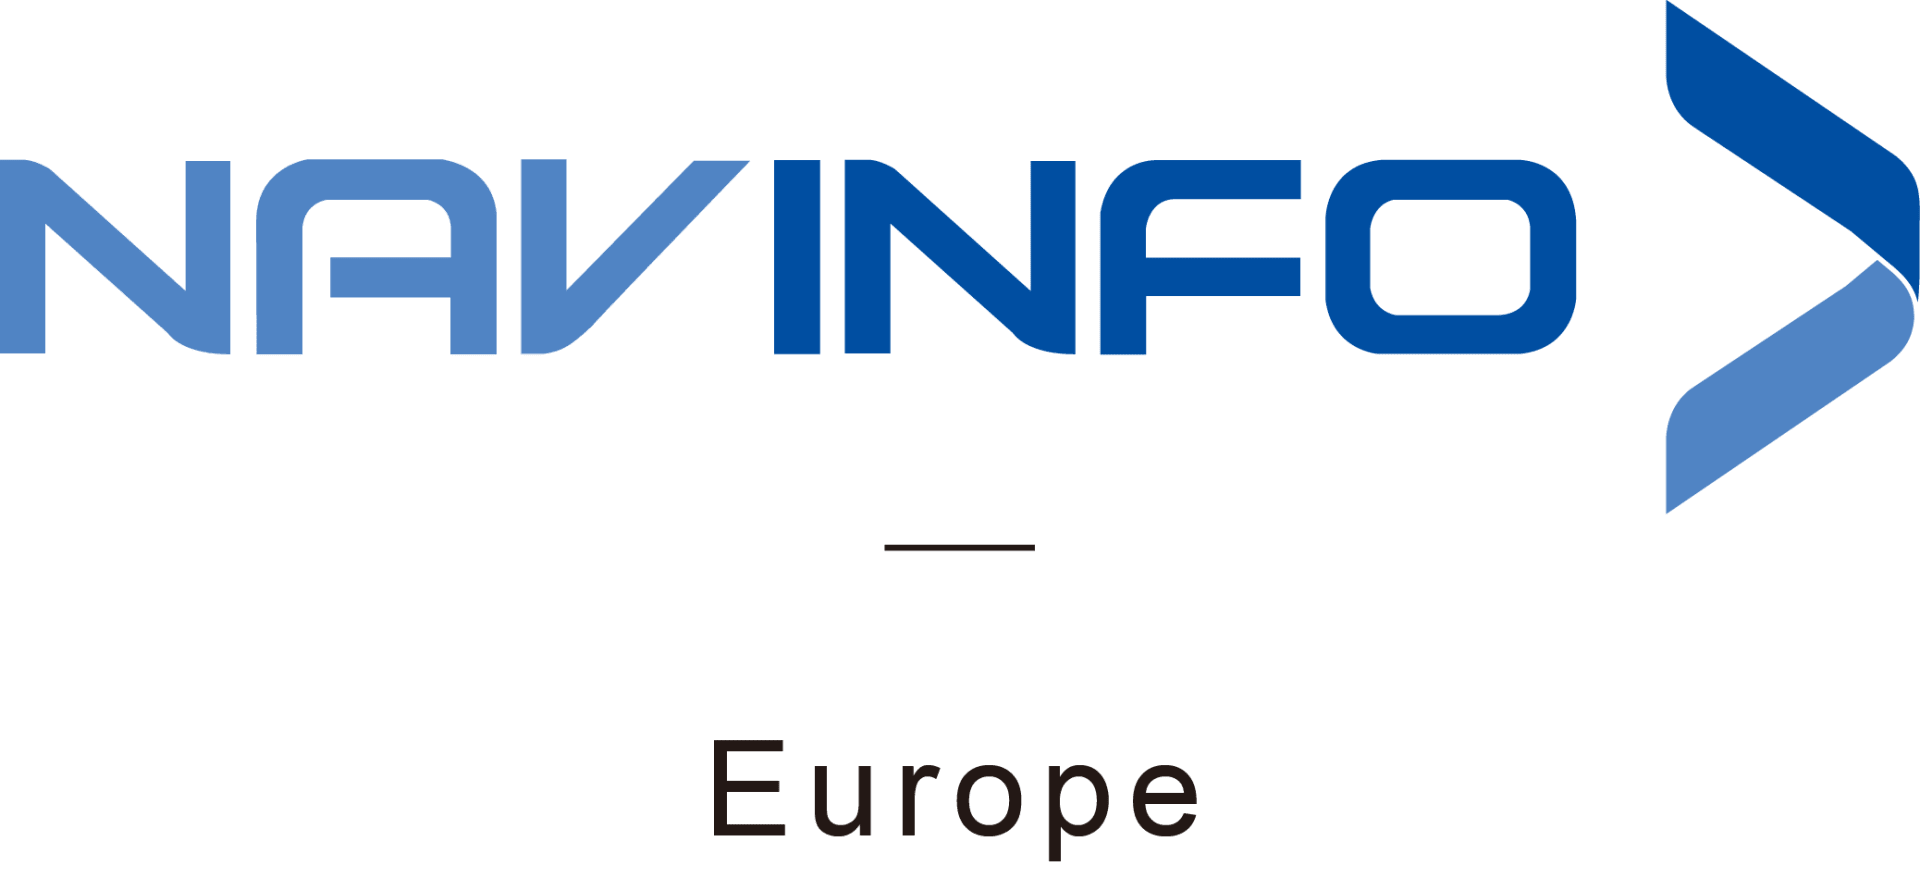 NavInfo Europe BV logo